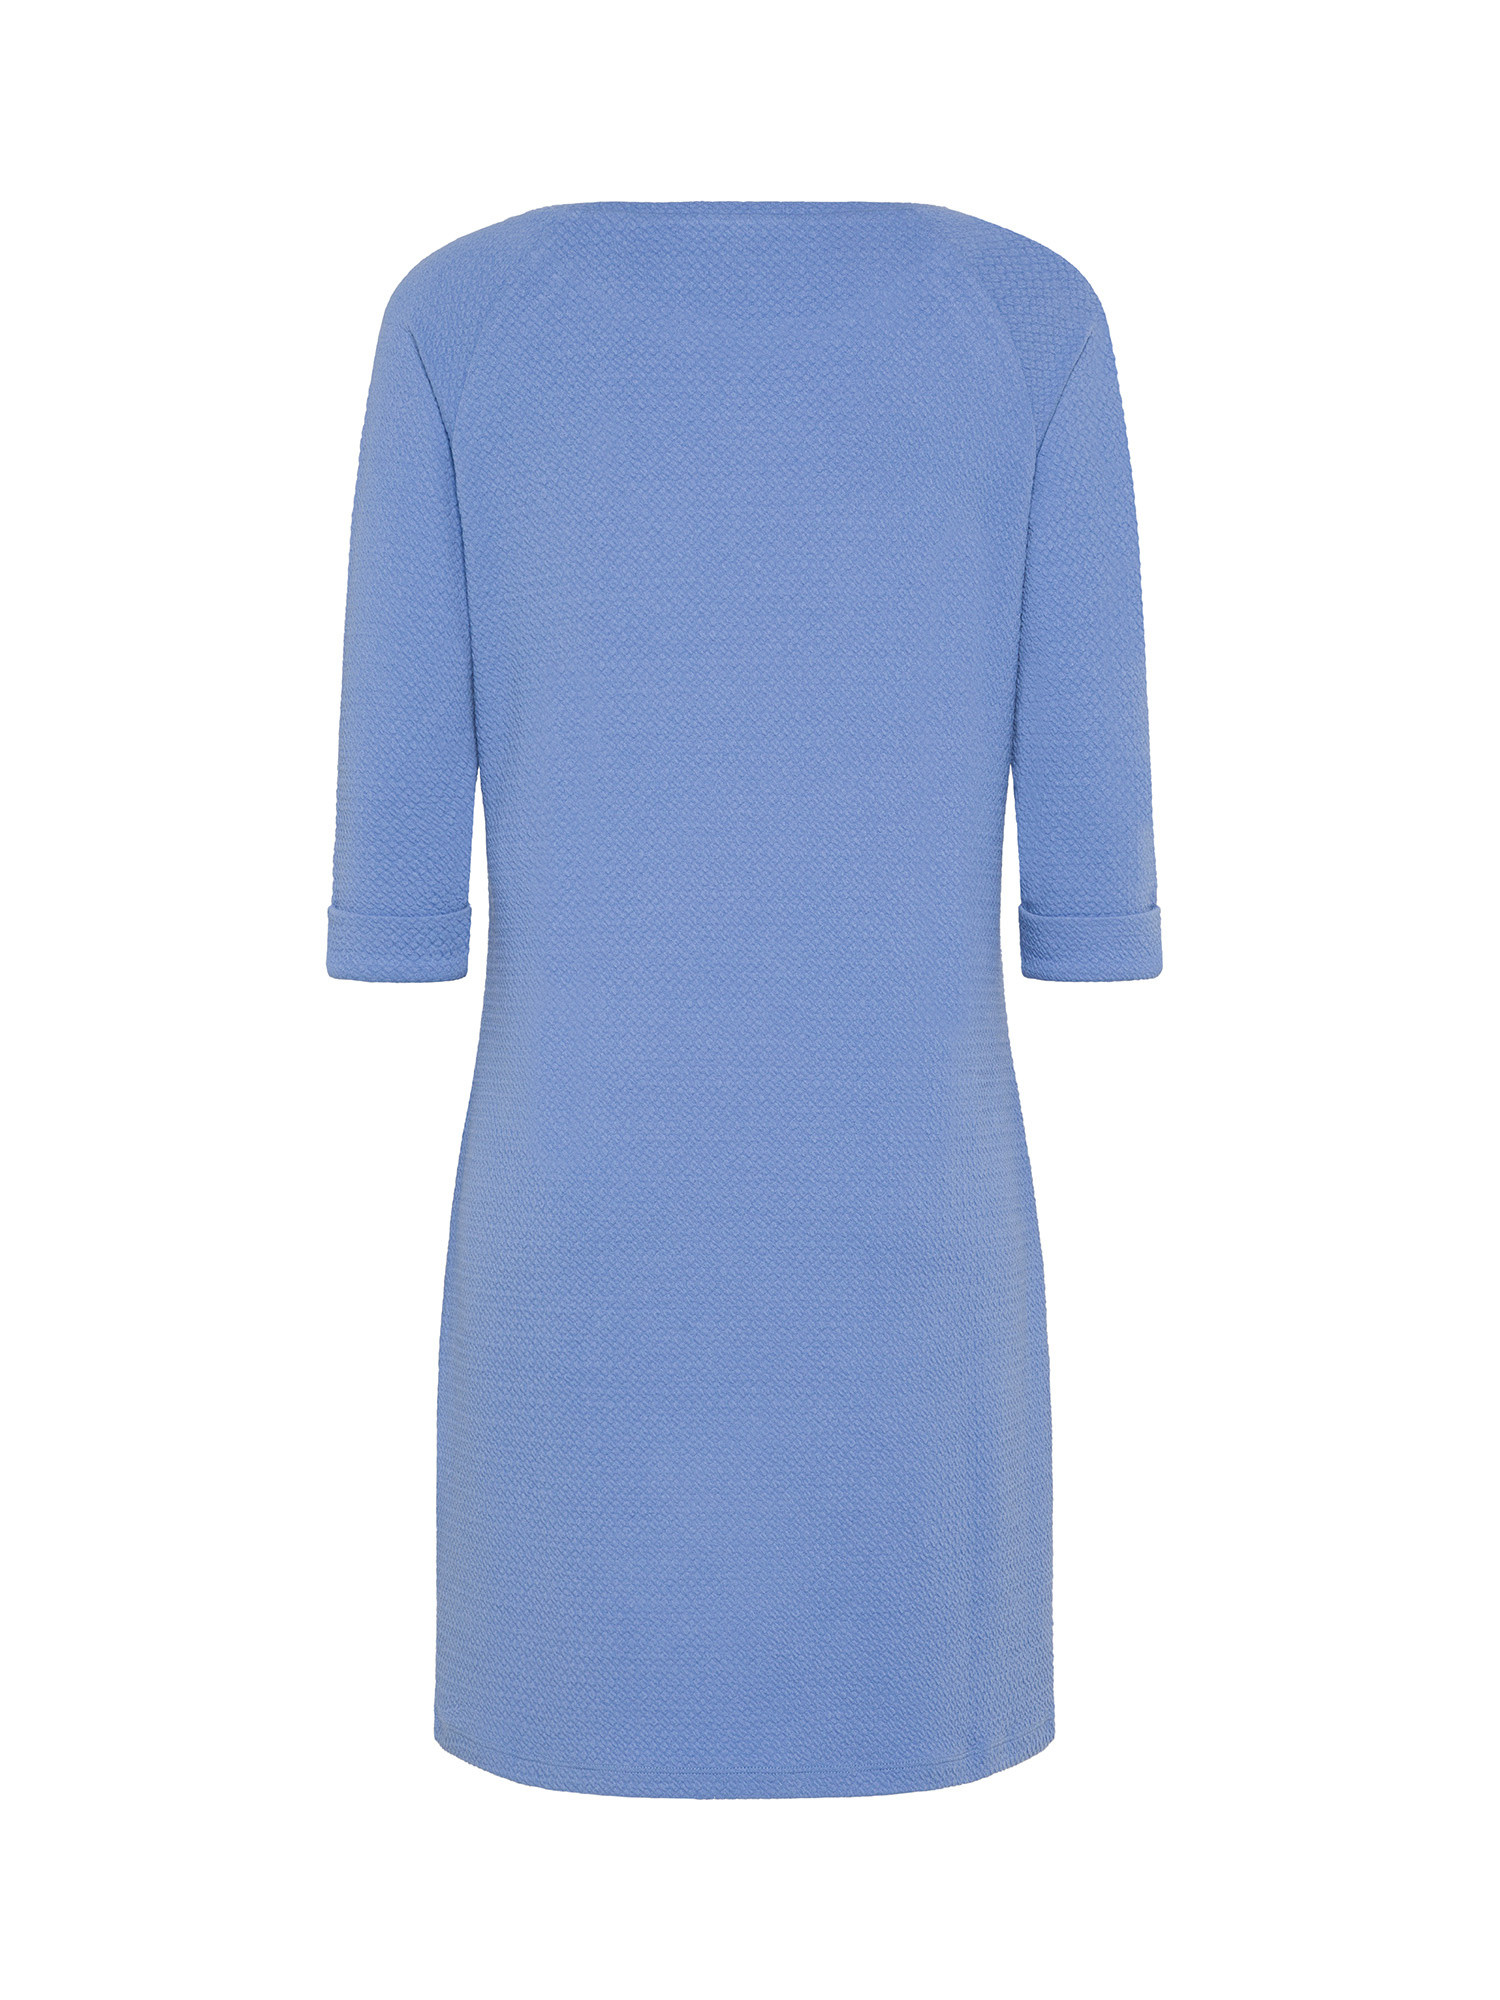 Koan - Dress with rhinestones, Light Blue, large image number 1